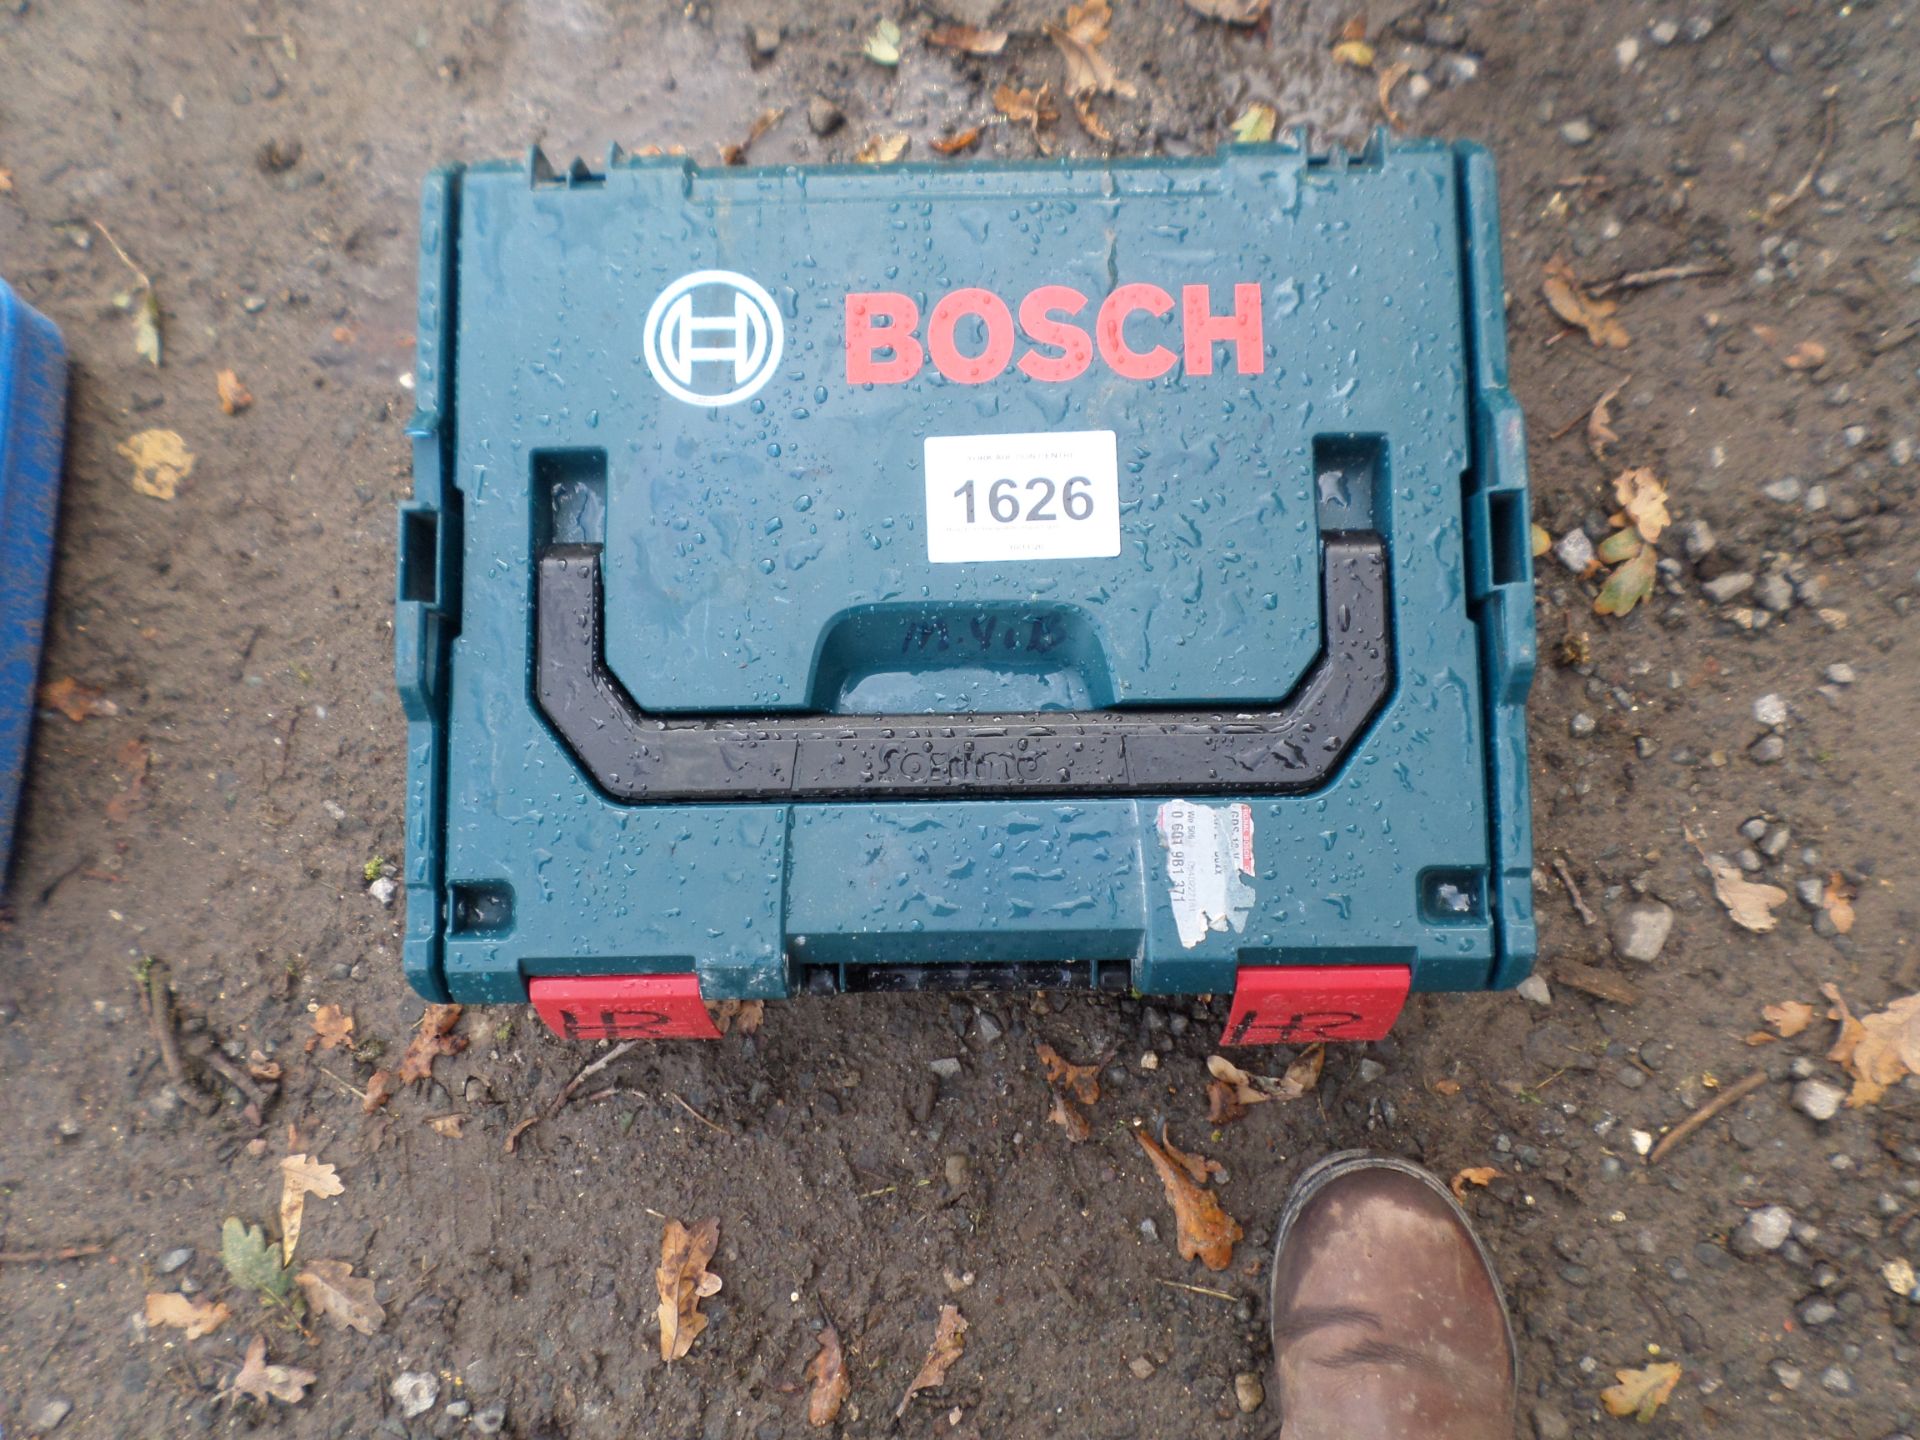 Bosch rechargeable impact gun NO VAT - Image 2 of 2